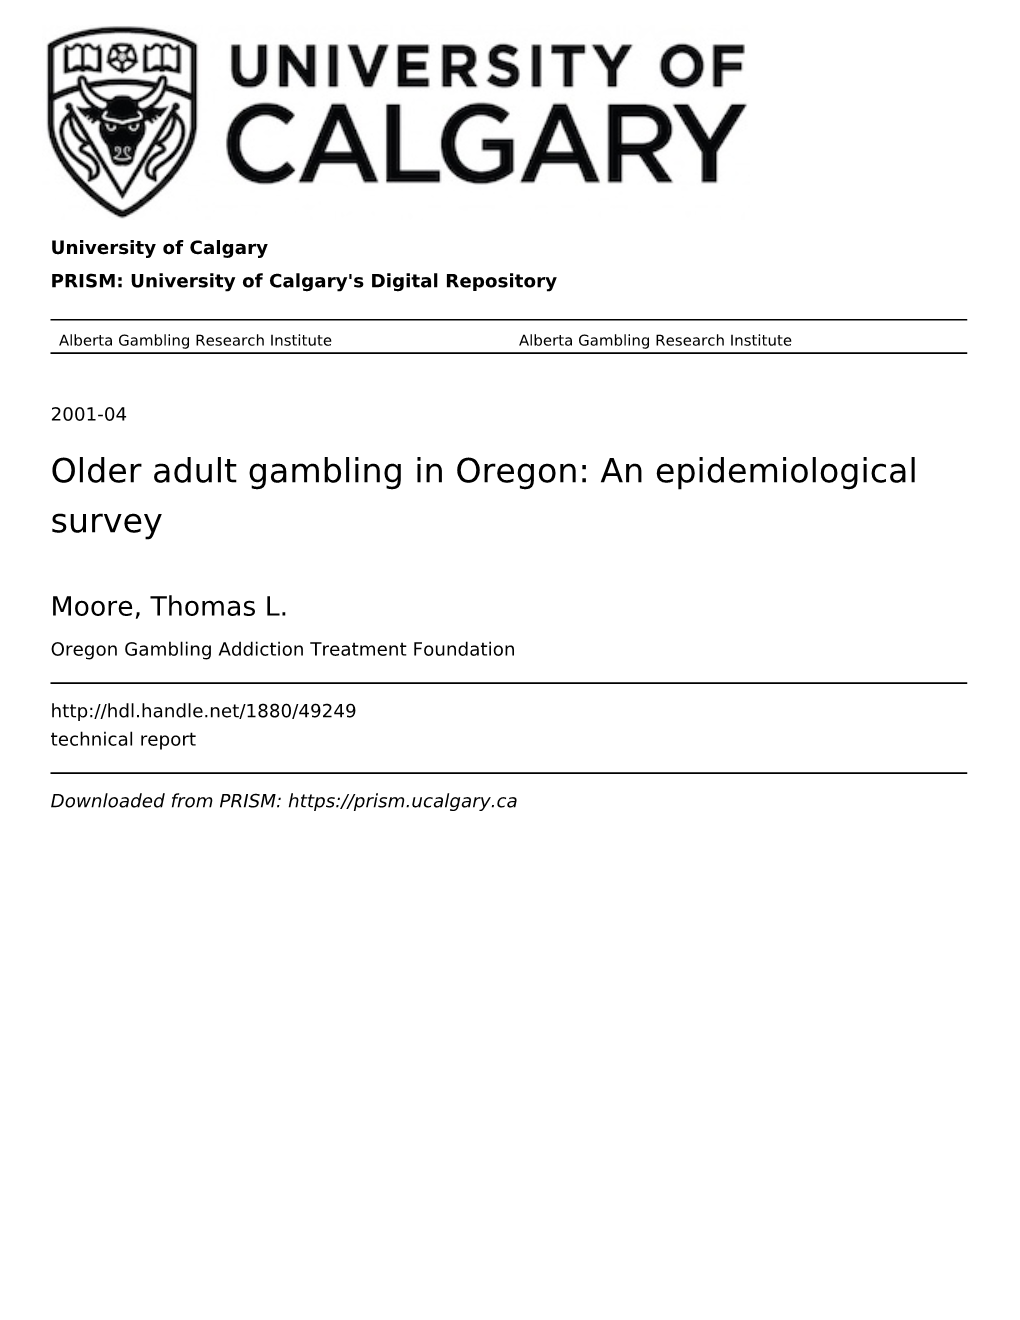 Older Adult Gambling in Oregon: an Epidemiological Survey